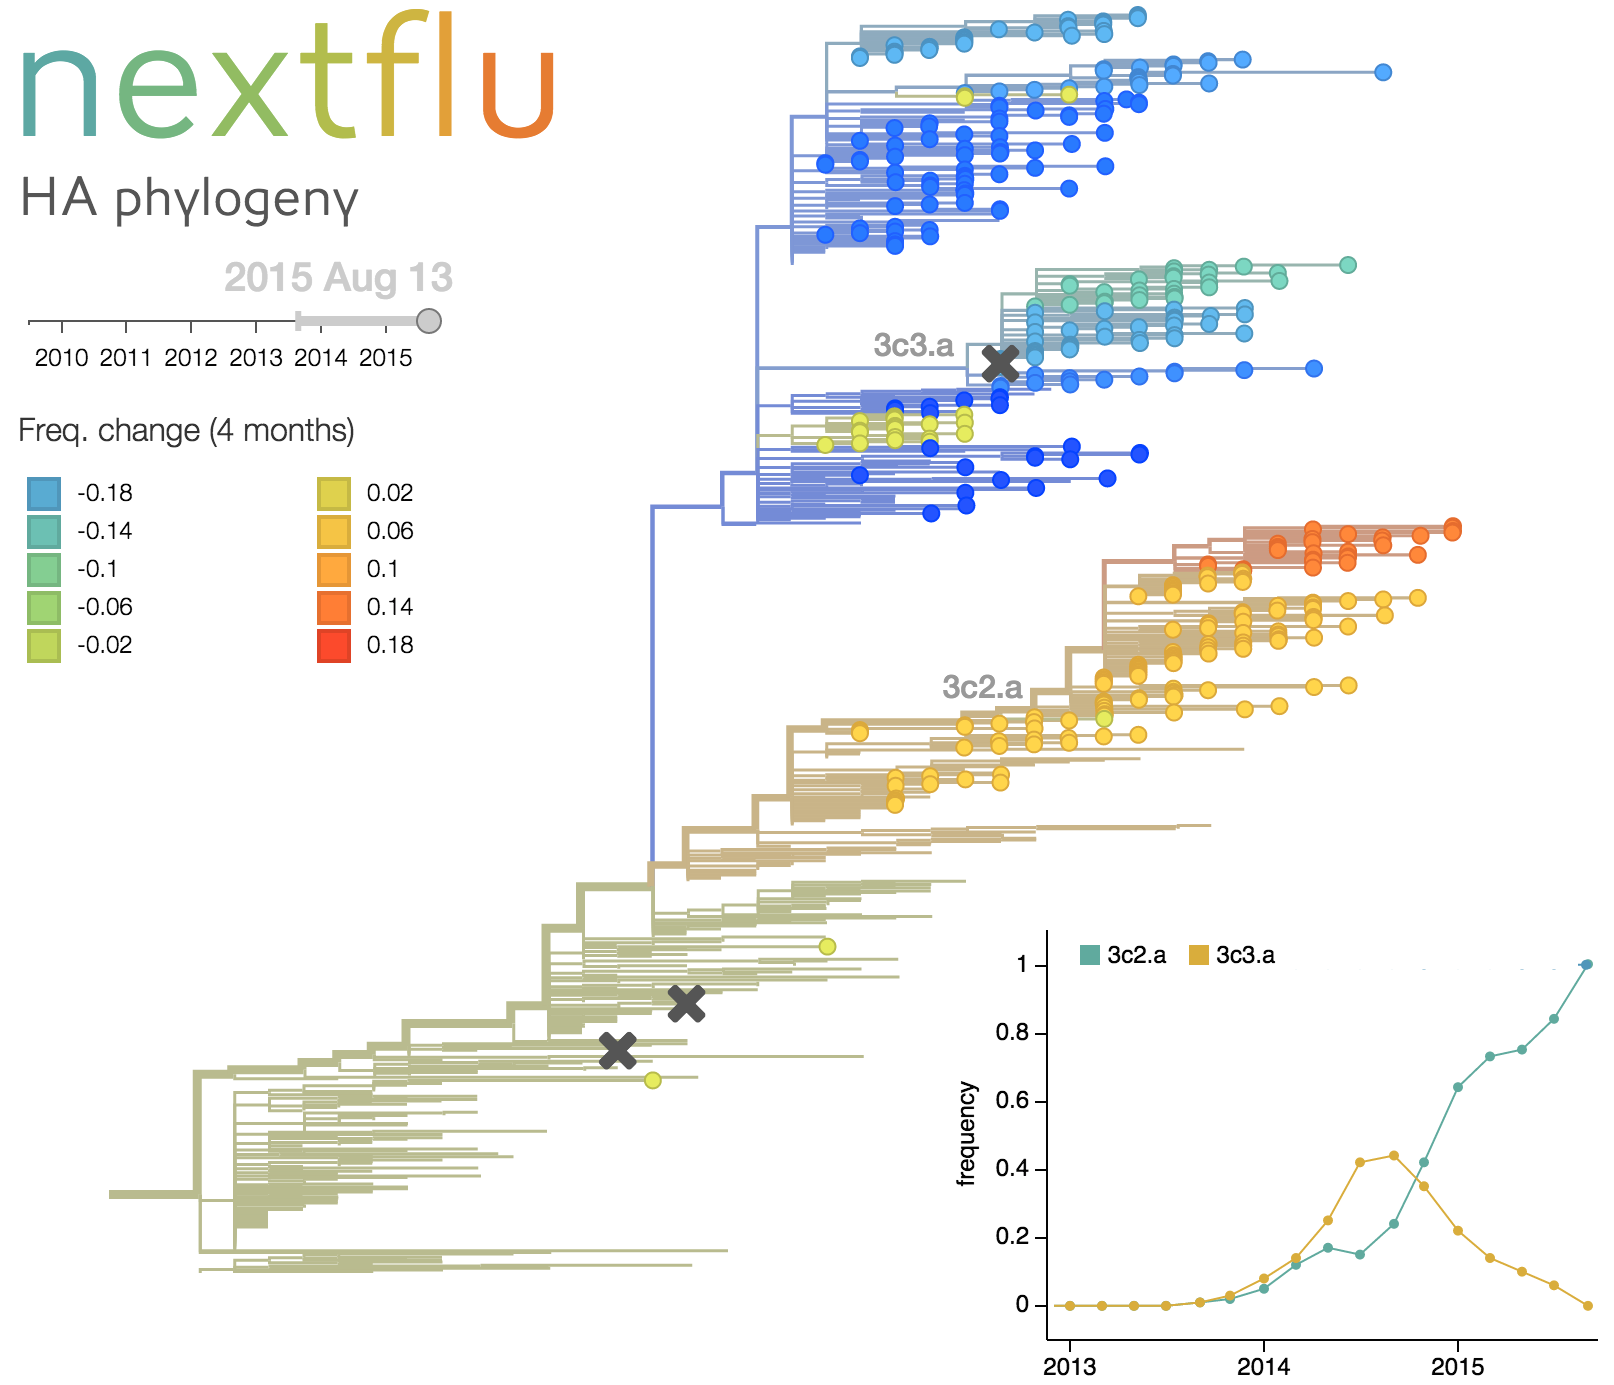 Phylogenetic analysis of influenza